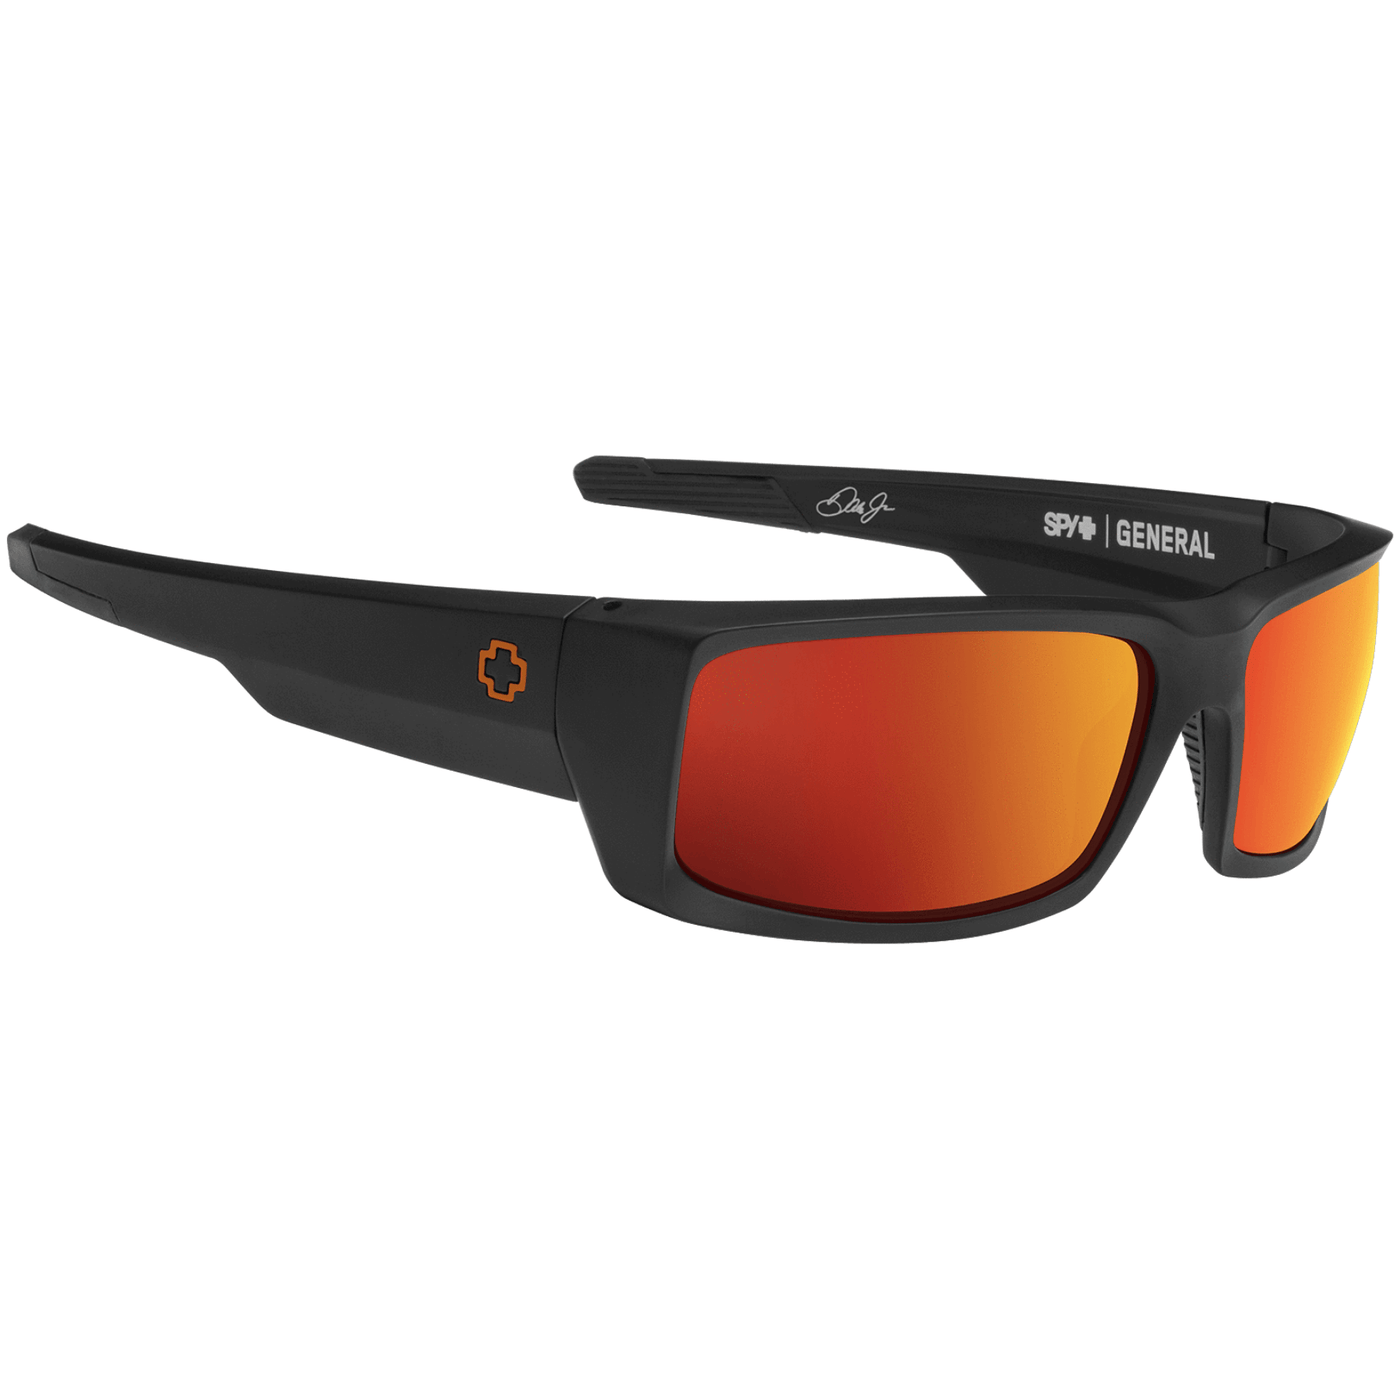 dale earnhardt jr sunglasses - orange